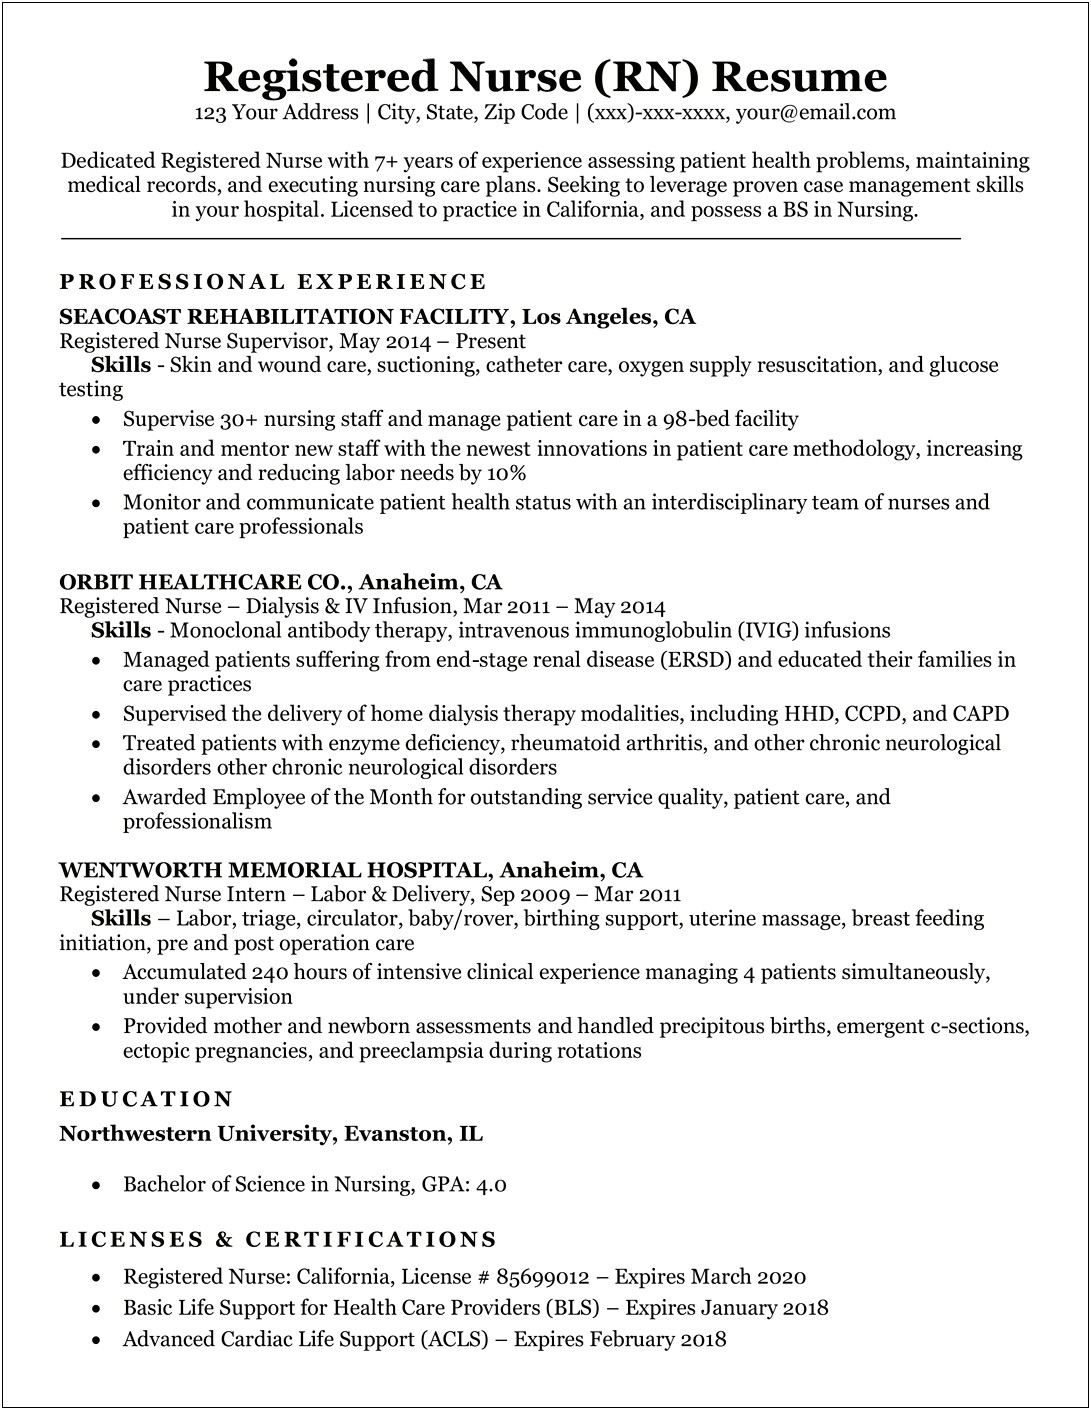 Operating Room Nurse Job Description Resume